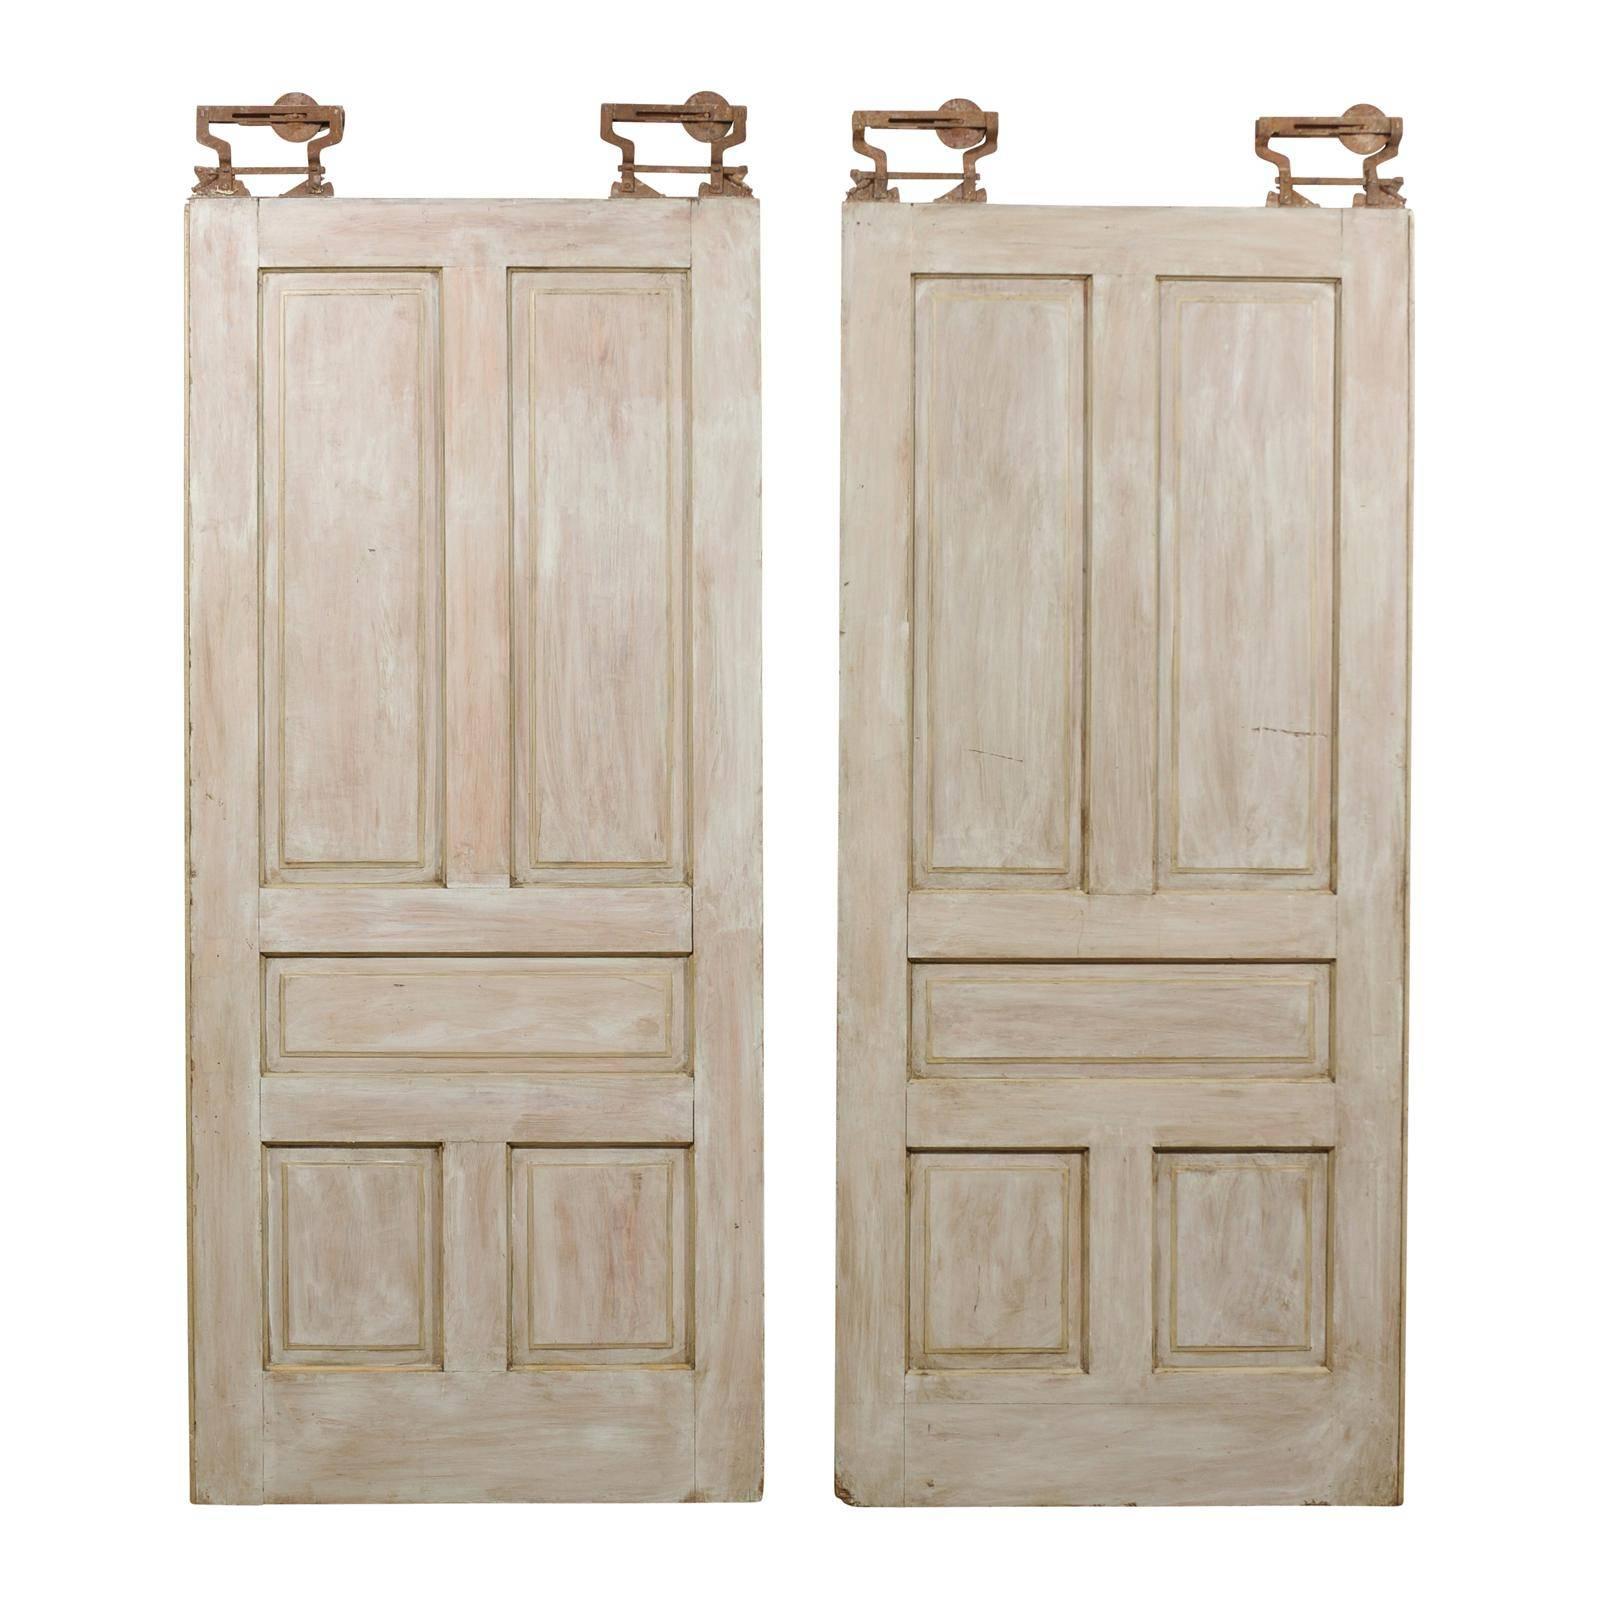 Pair of Early 20th Century Painted Wood Pocket Doors